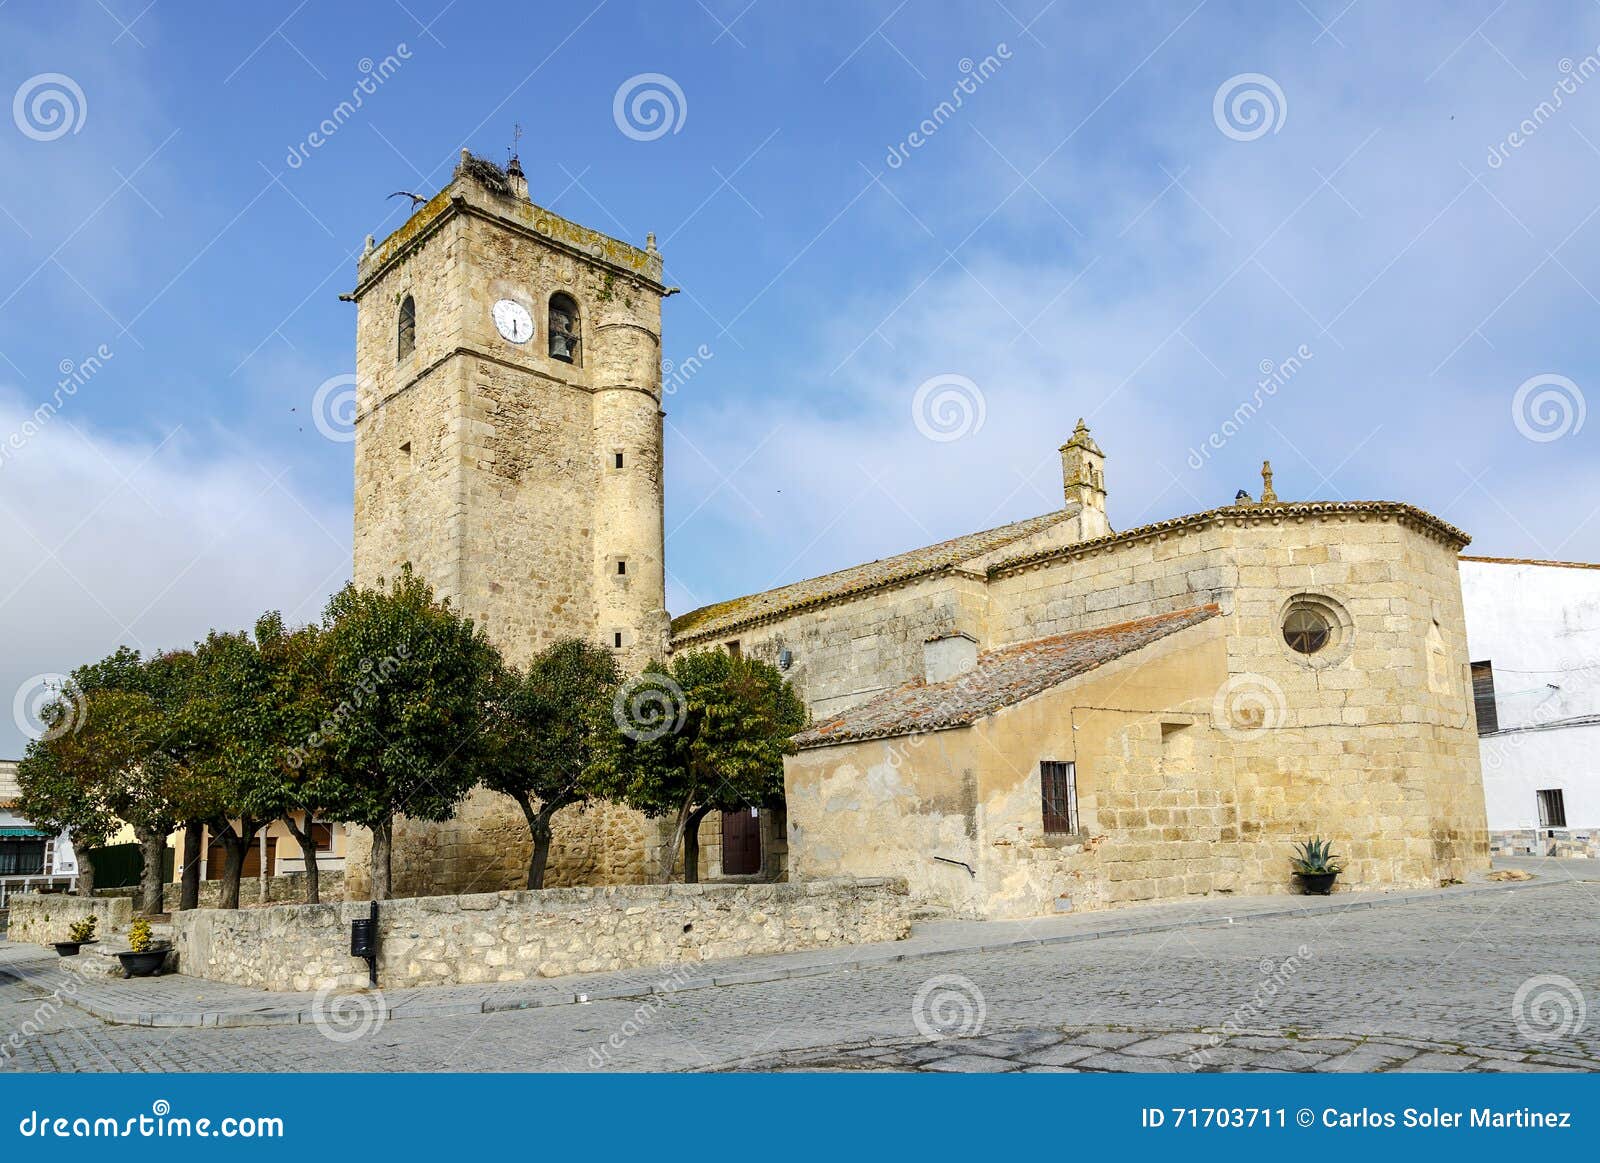 aldea del cano church of st. martin of tours, caceres, spain